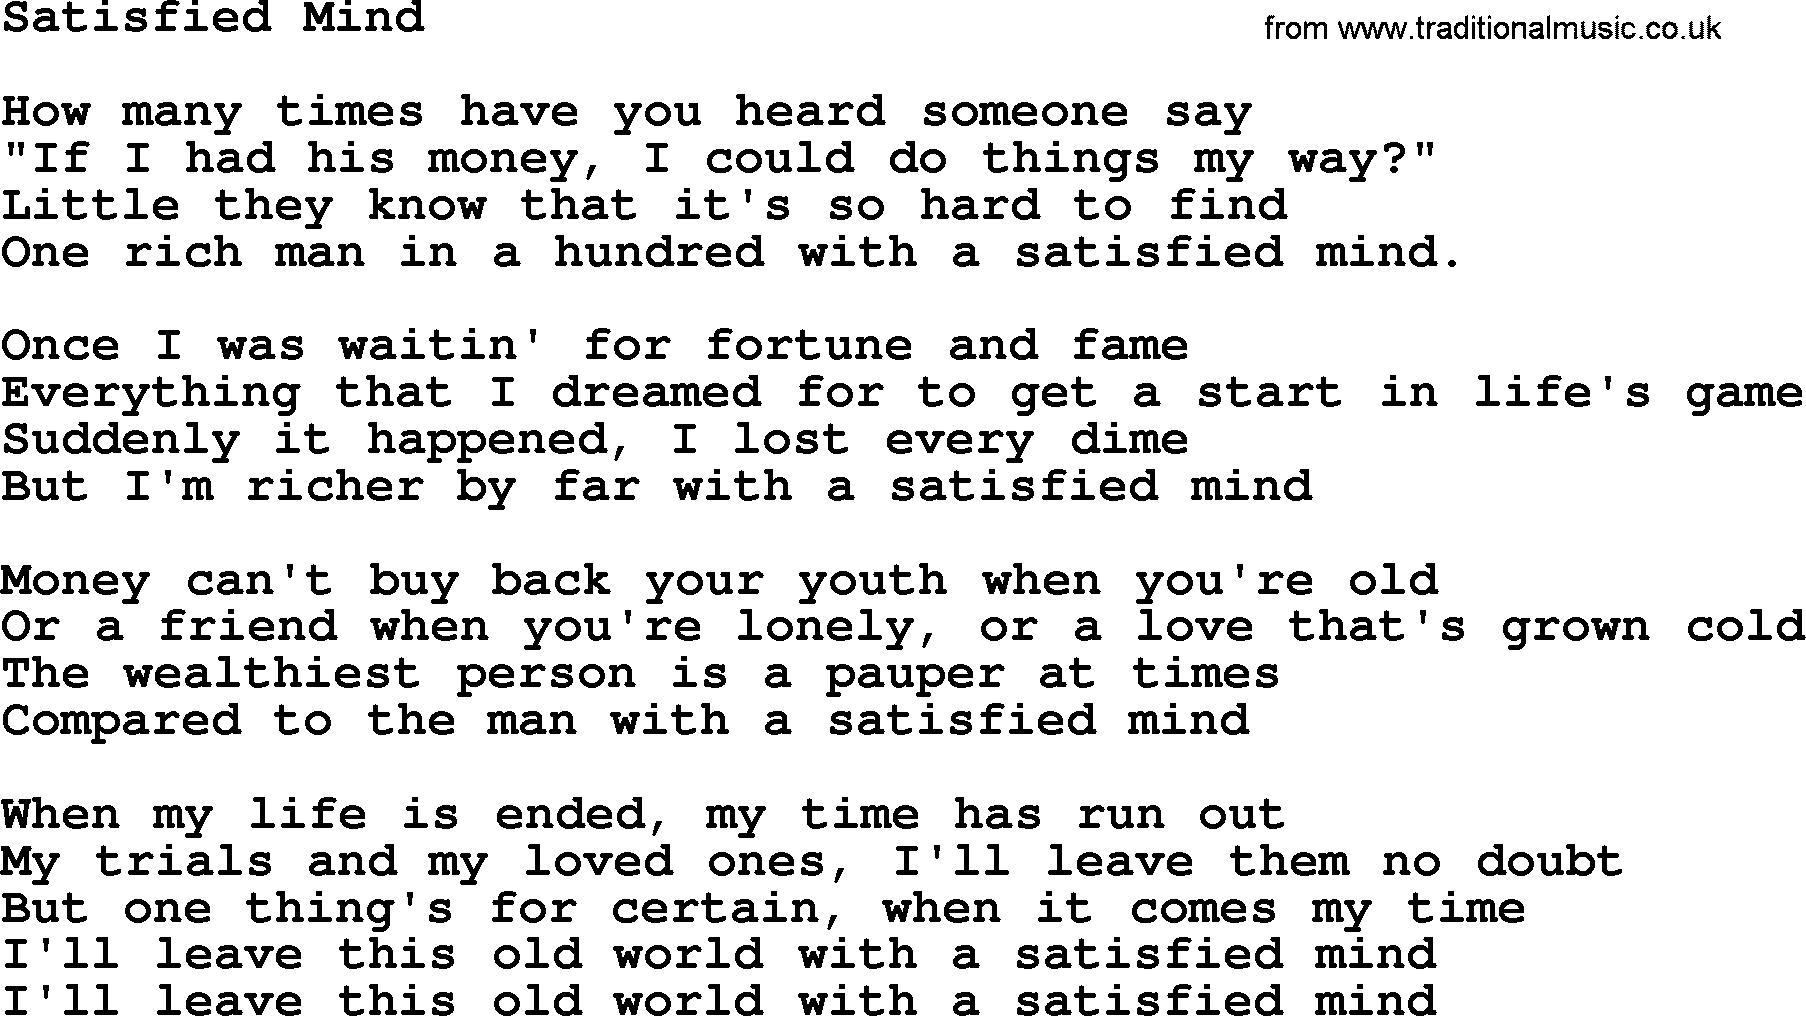 Joan Baez song Satisfied Mind, lyrics